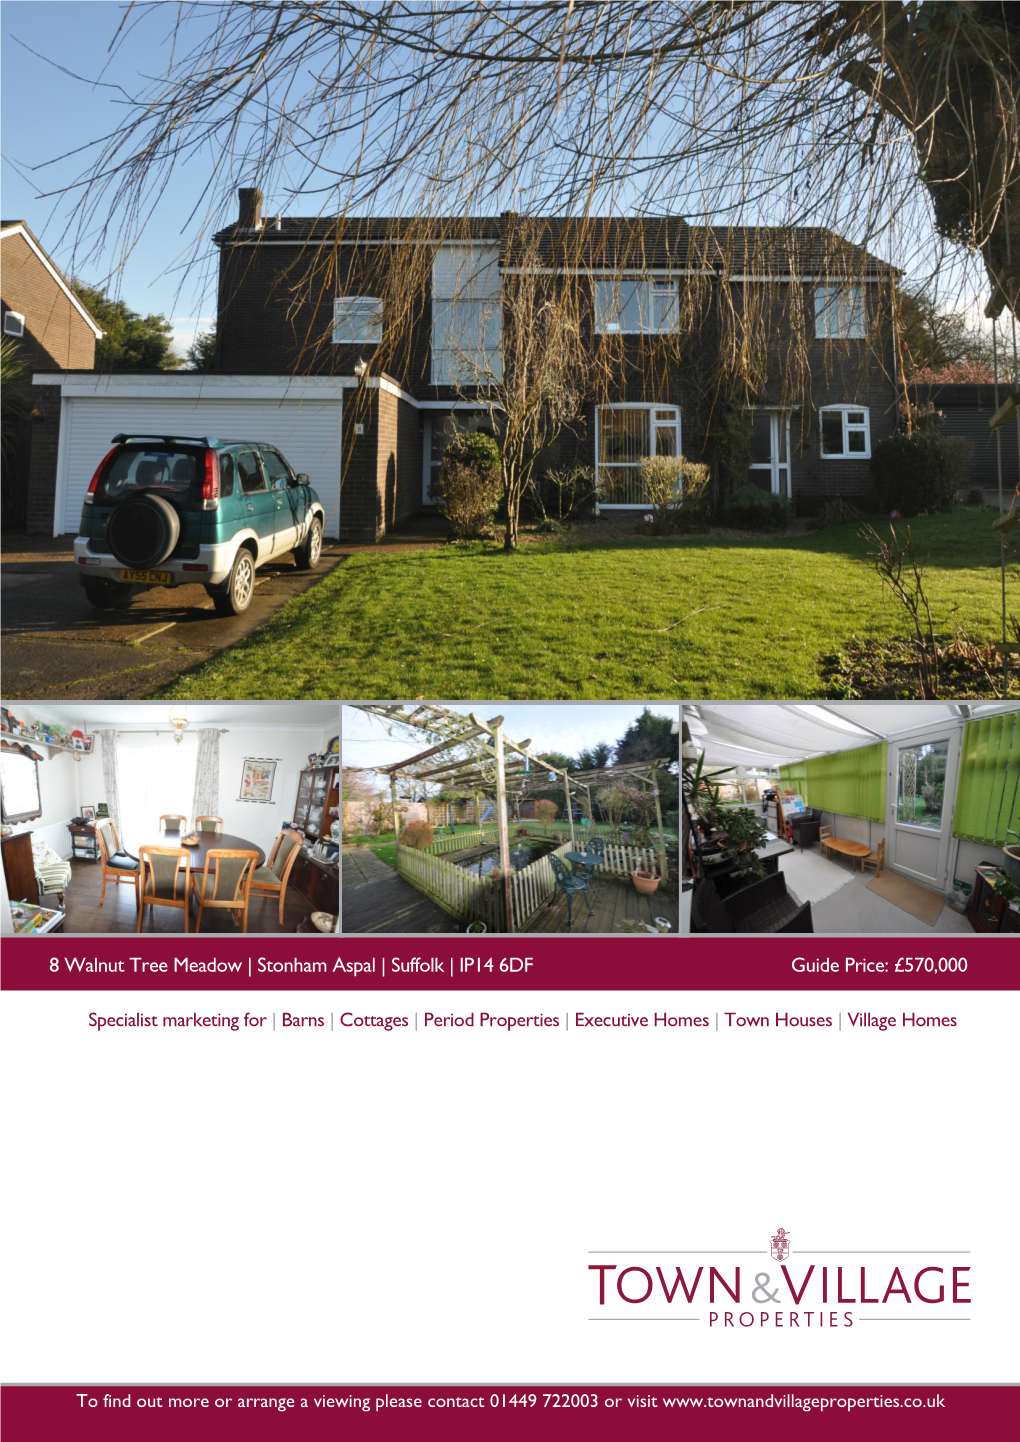 8 Walnut Tree Meadow | Stonham Aspal | Suffolk | IP14 6DF Guide Price: £570,000